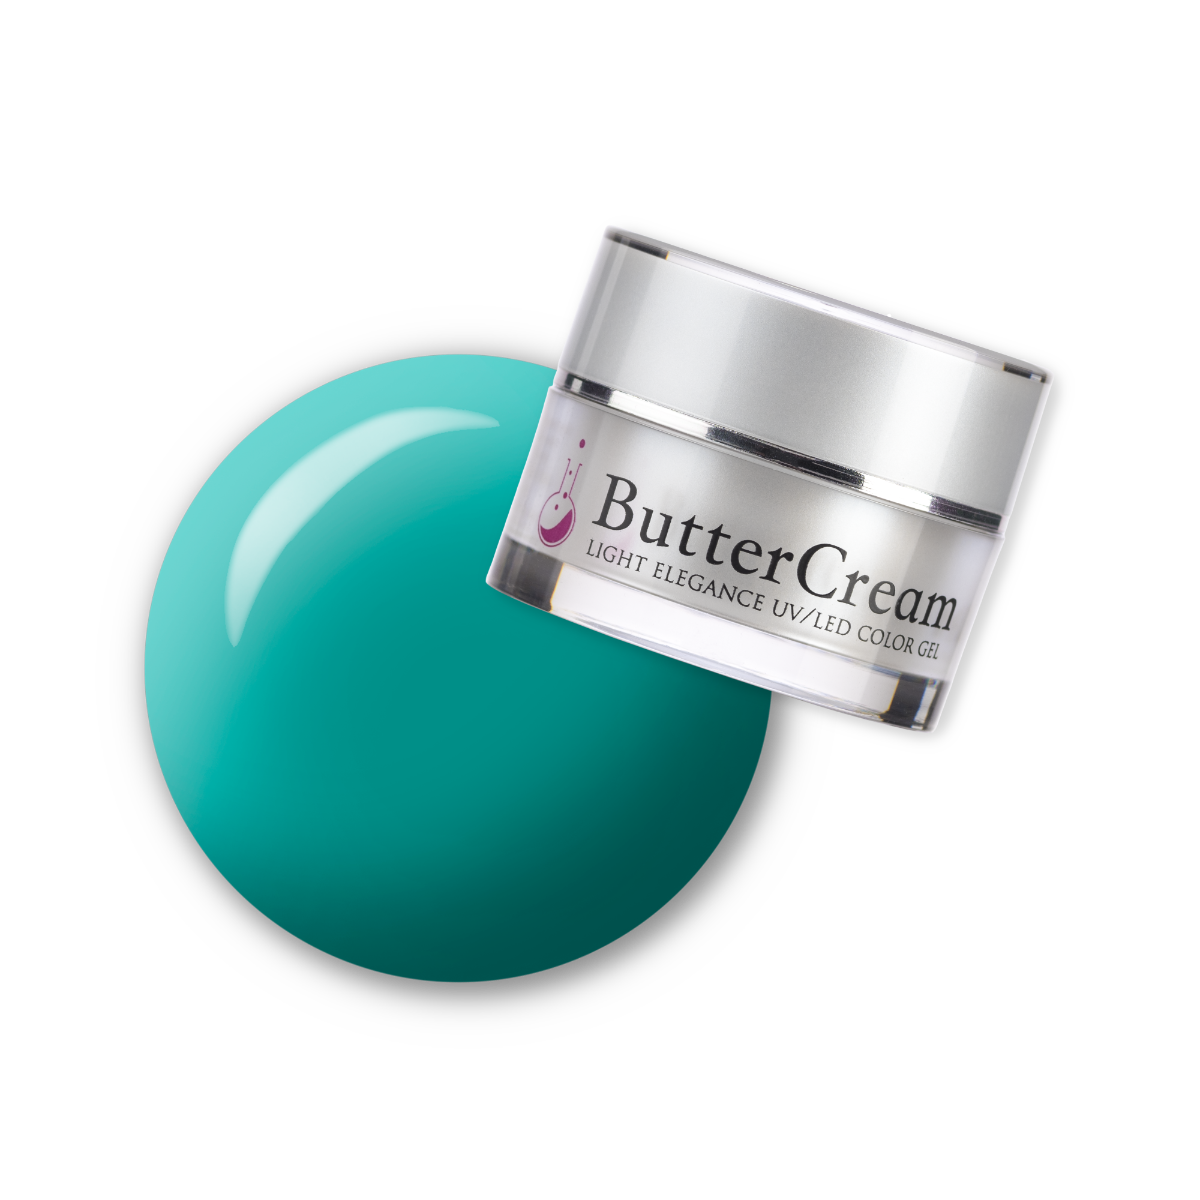 Light Elegance ButterCream - Alien Invasion - Creata Beauty - Professional Beauty Products